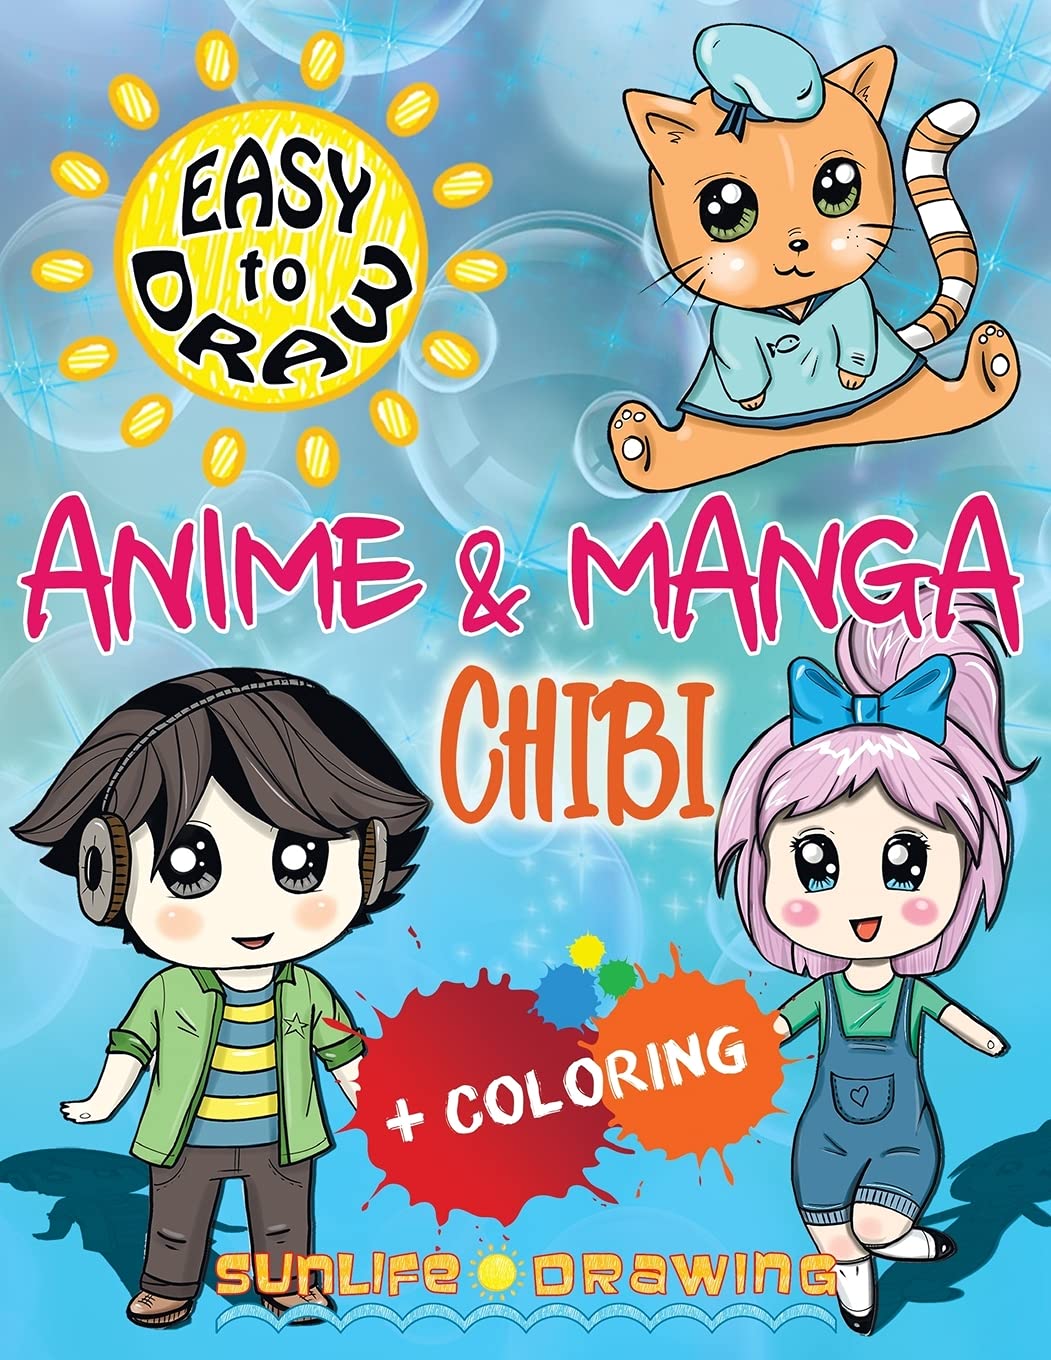 Premium AI Image | Minimal Japanese Kawaii Dog Boy Chibi Anime Vector Art  Sticker with Clean Bold Line Cute Simple